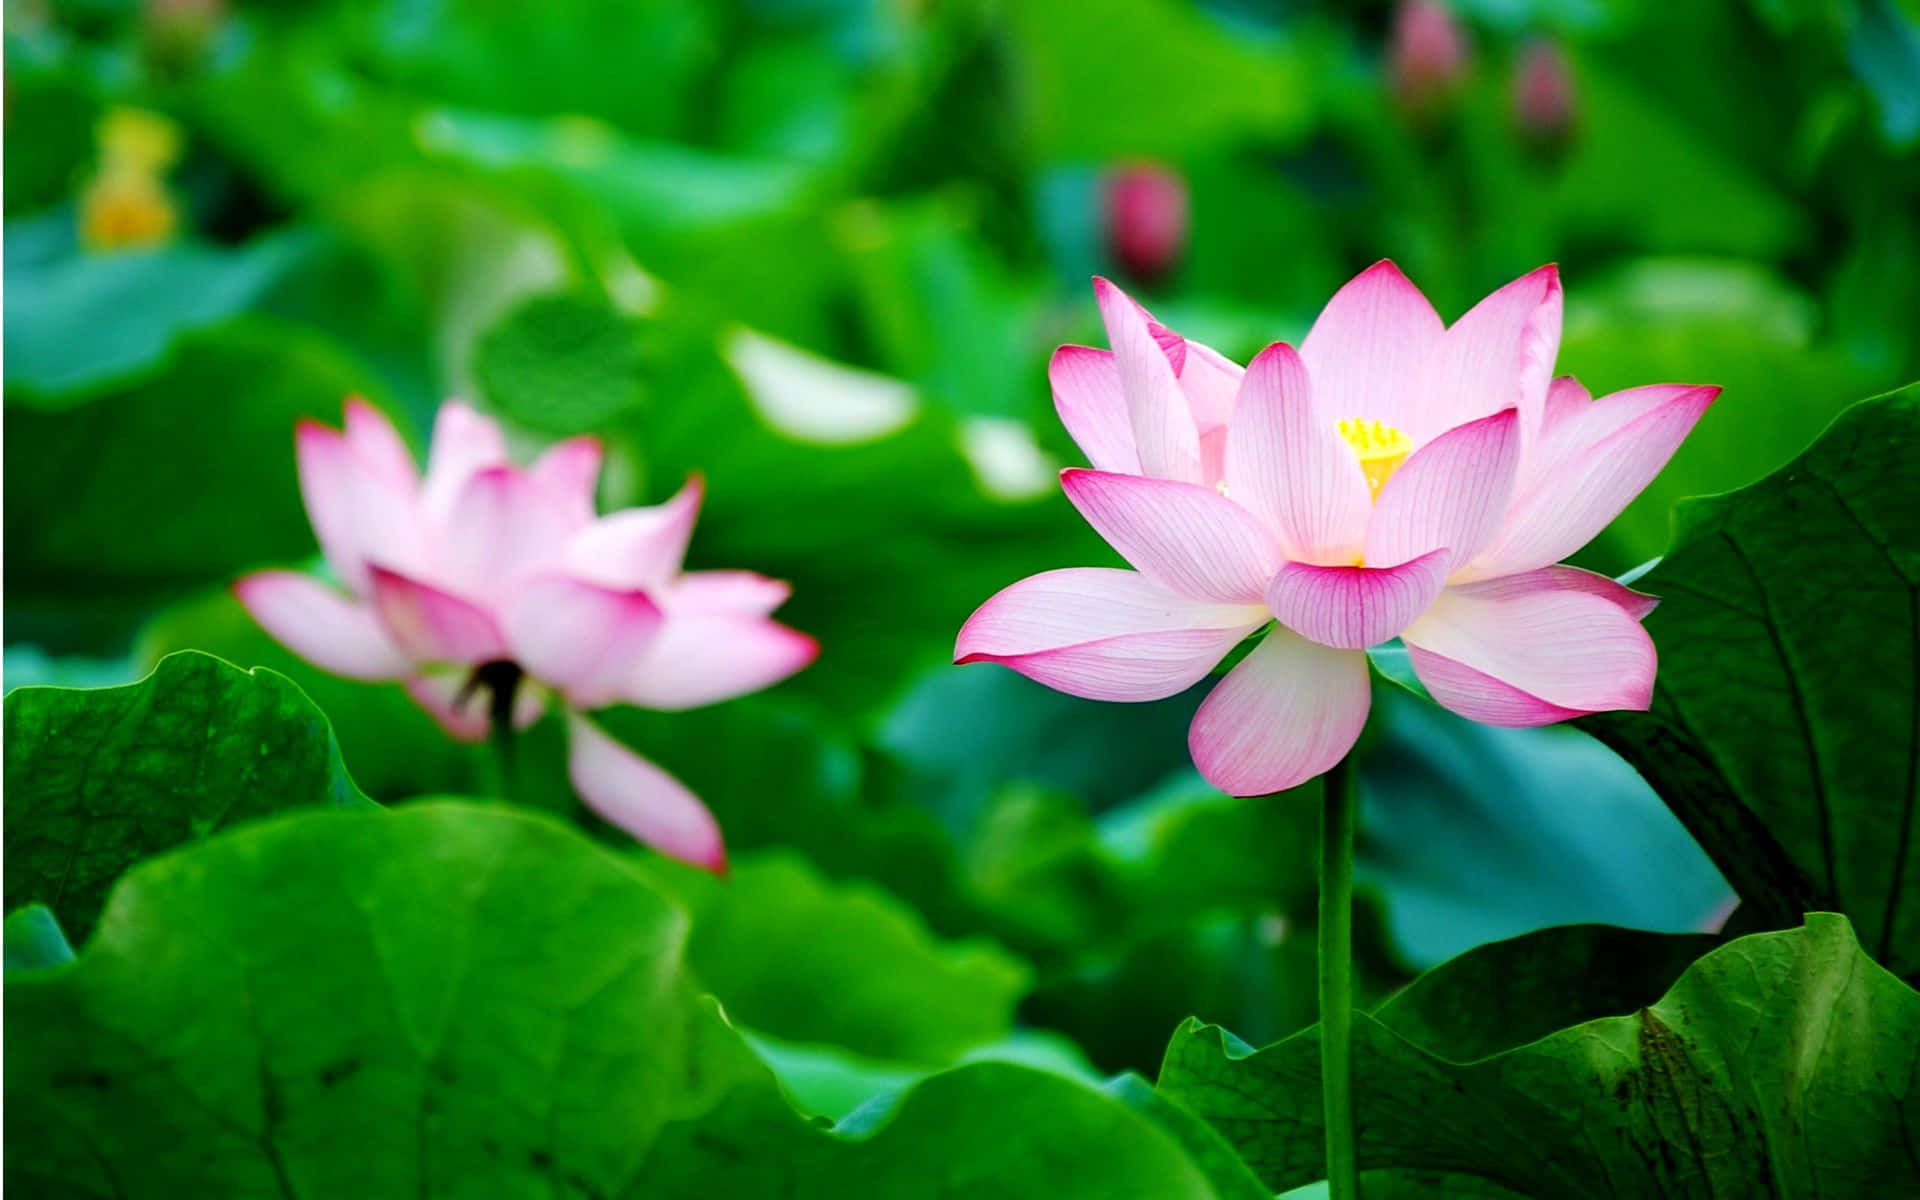 The Lotus Flower Inspires Refreshing Renewal